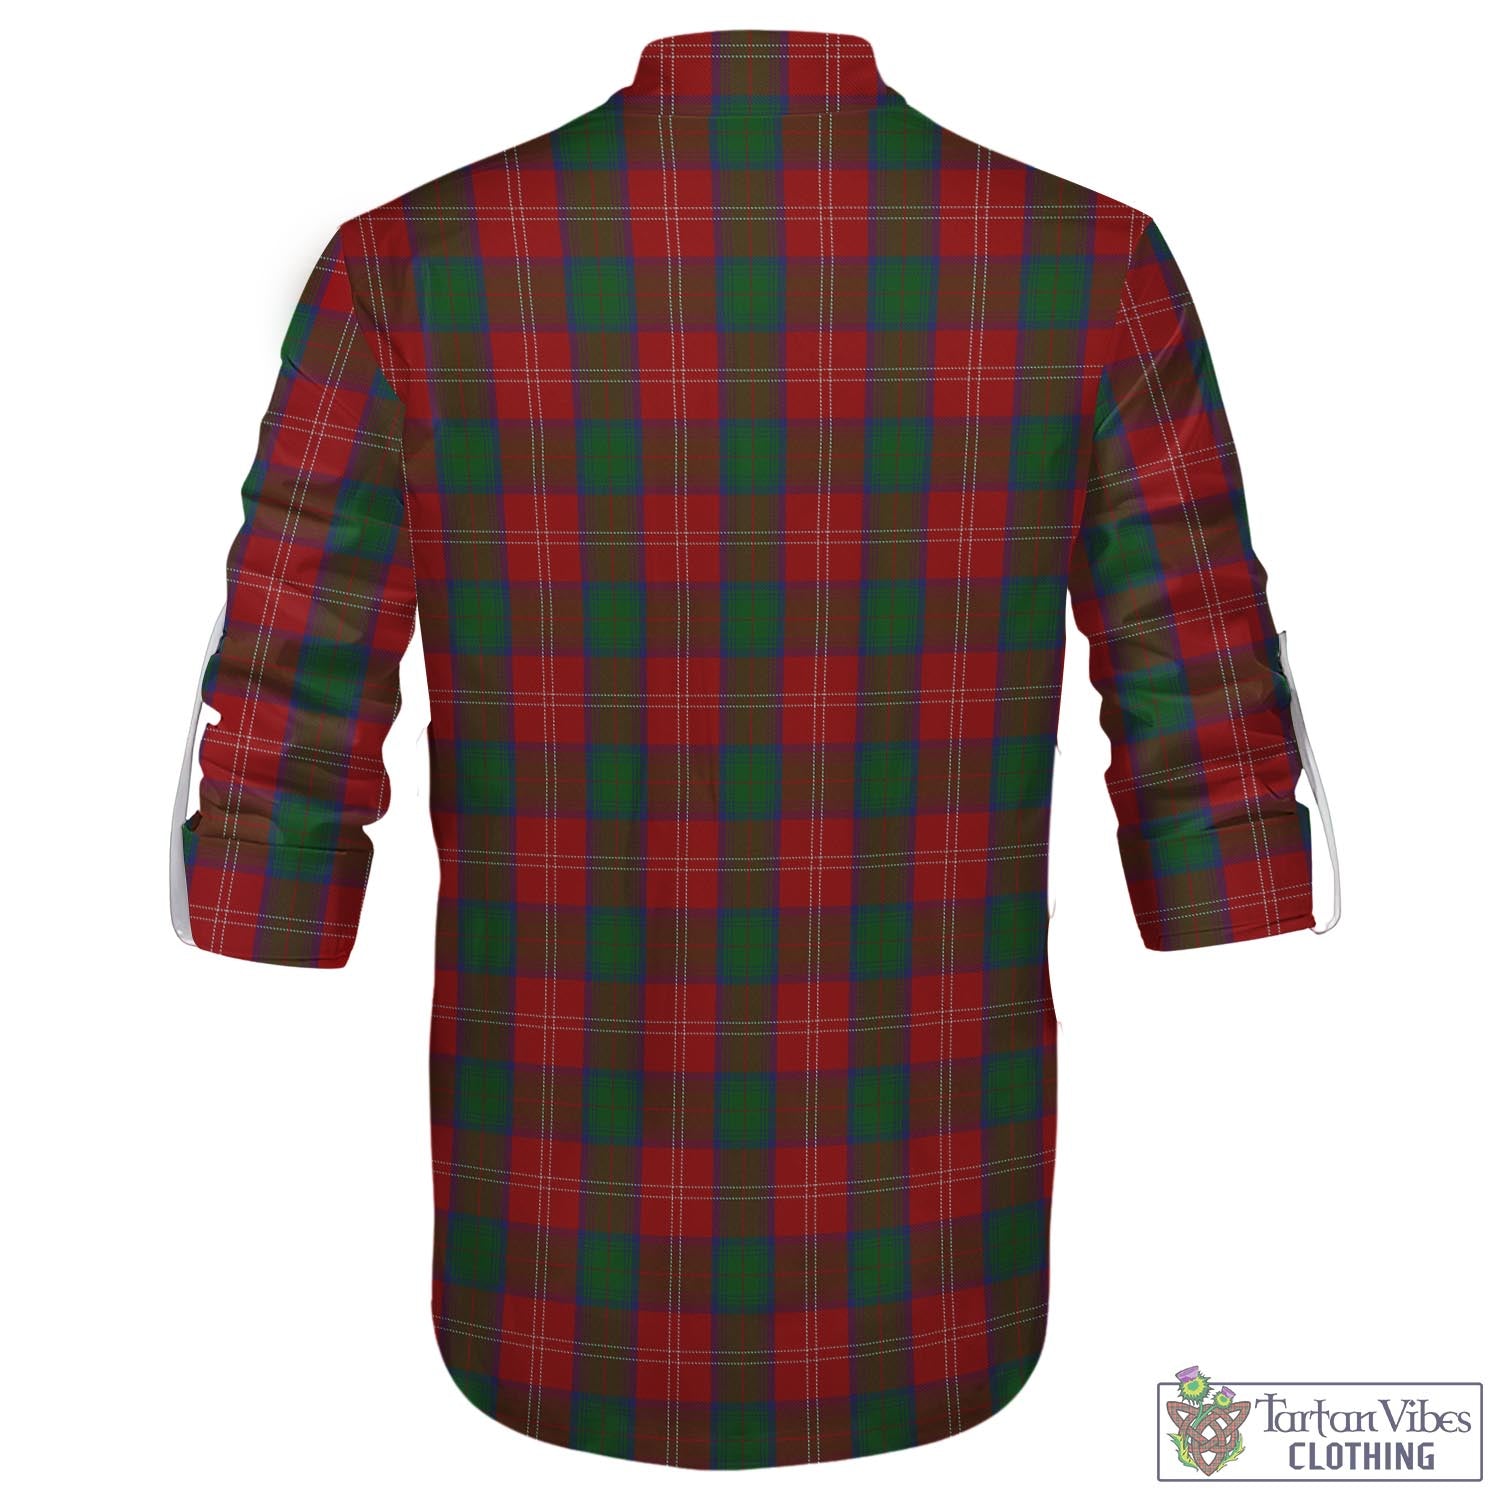 Tartan Vibes Clothing Chisholm Tartan Men's Scottish Traditional Jacobite Ghillie Kilt Shirt with Family Crest